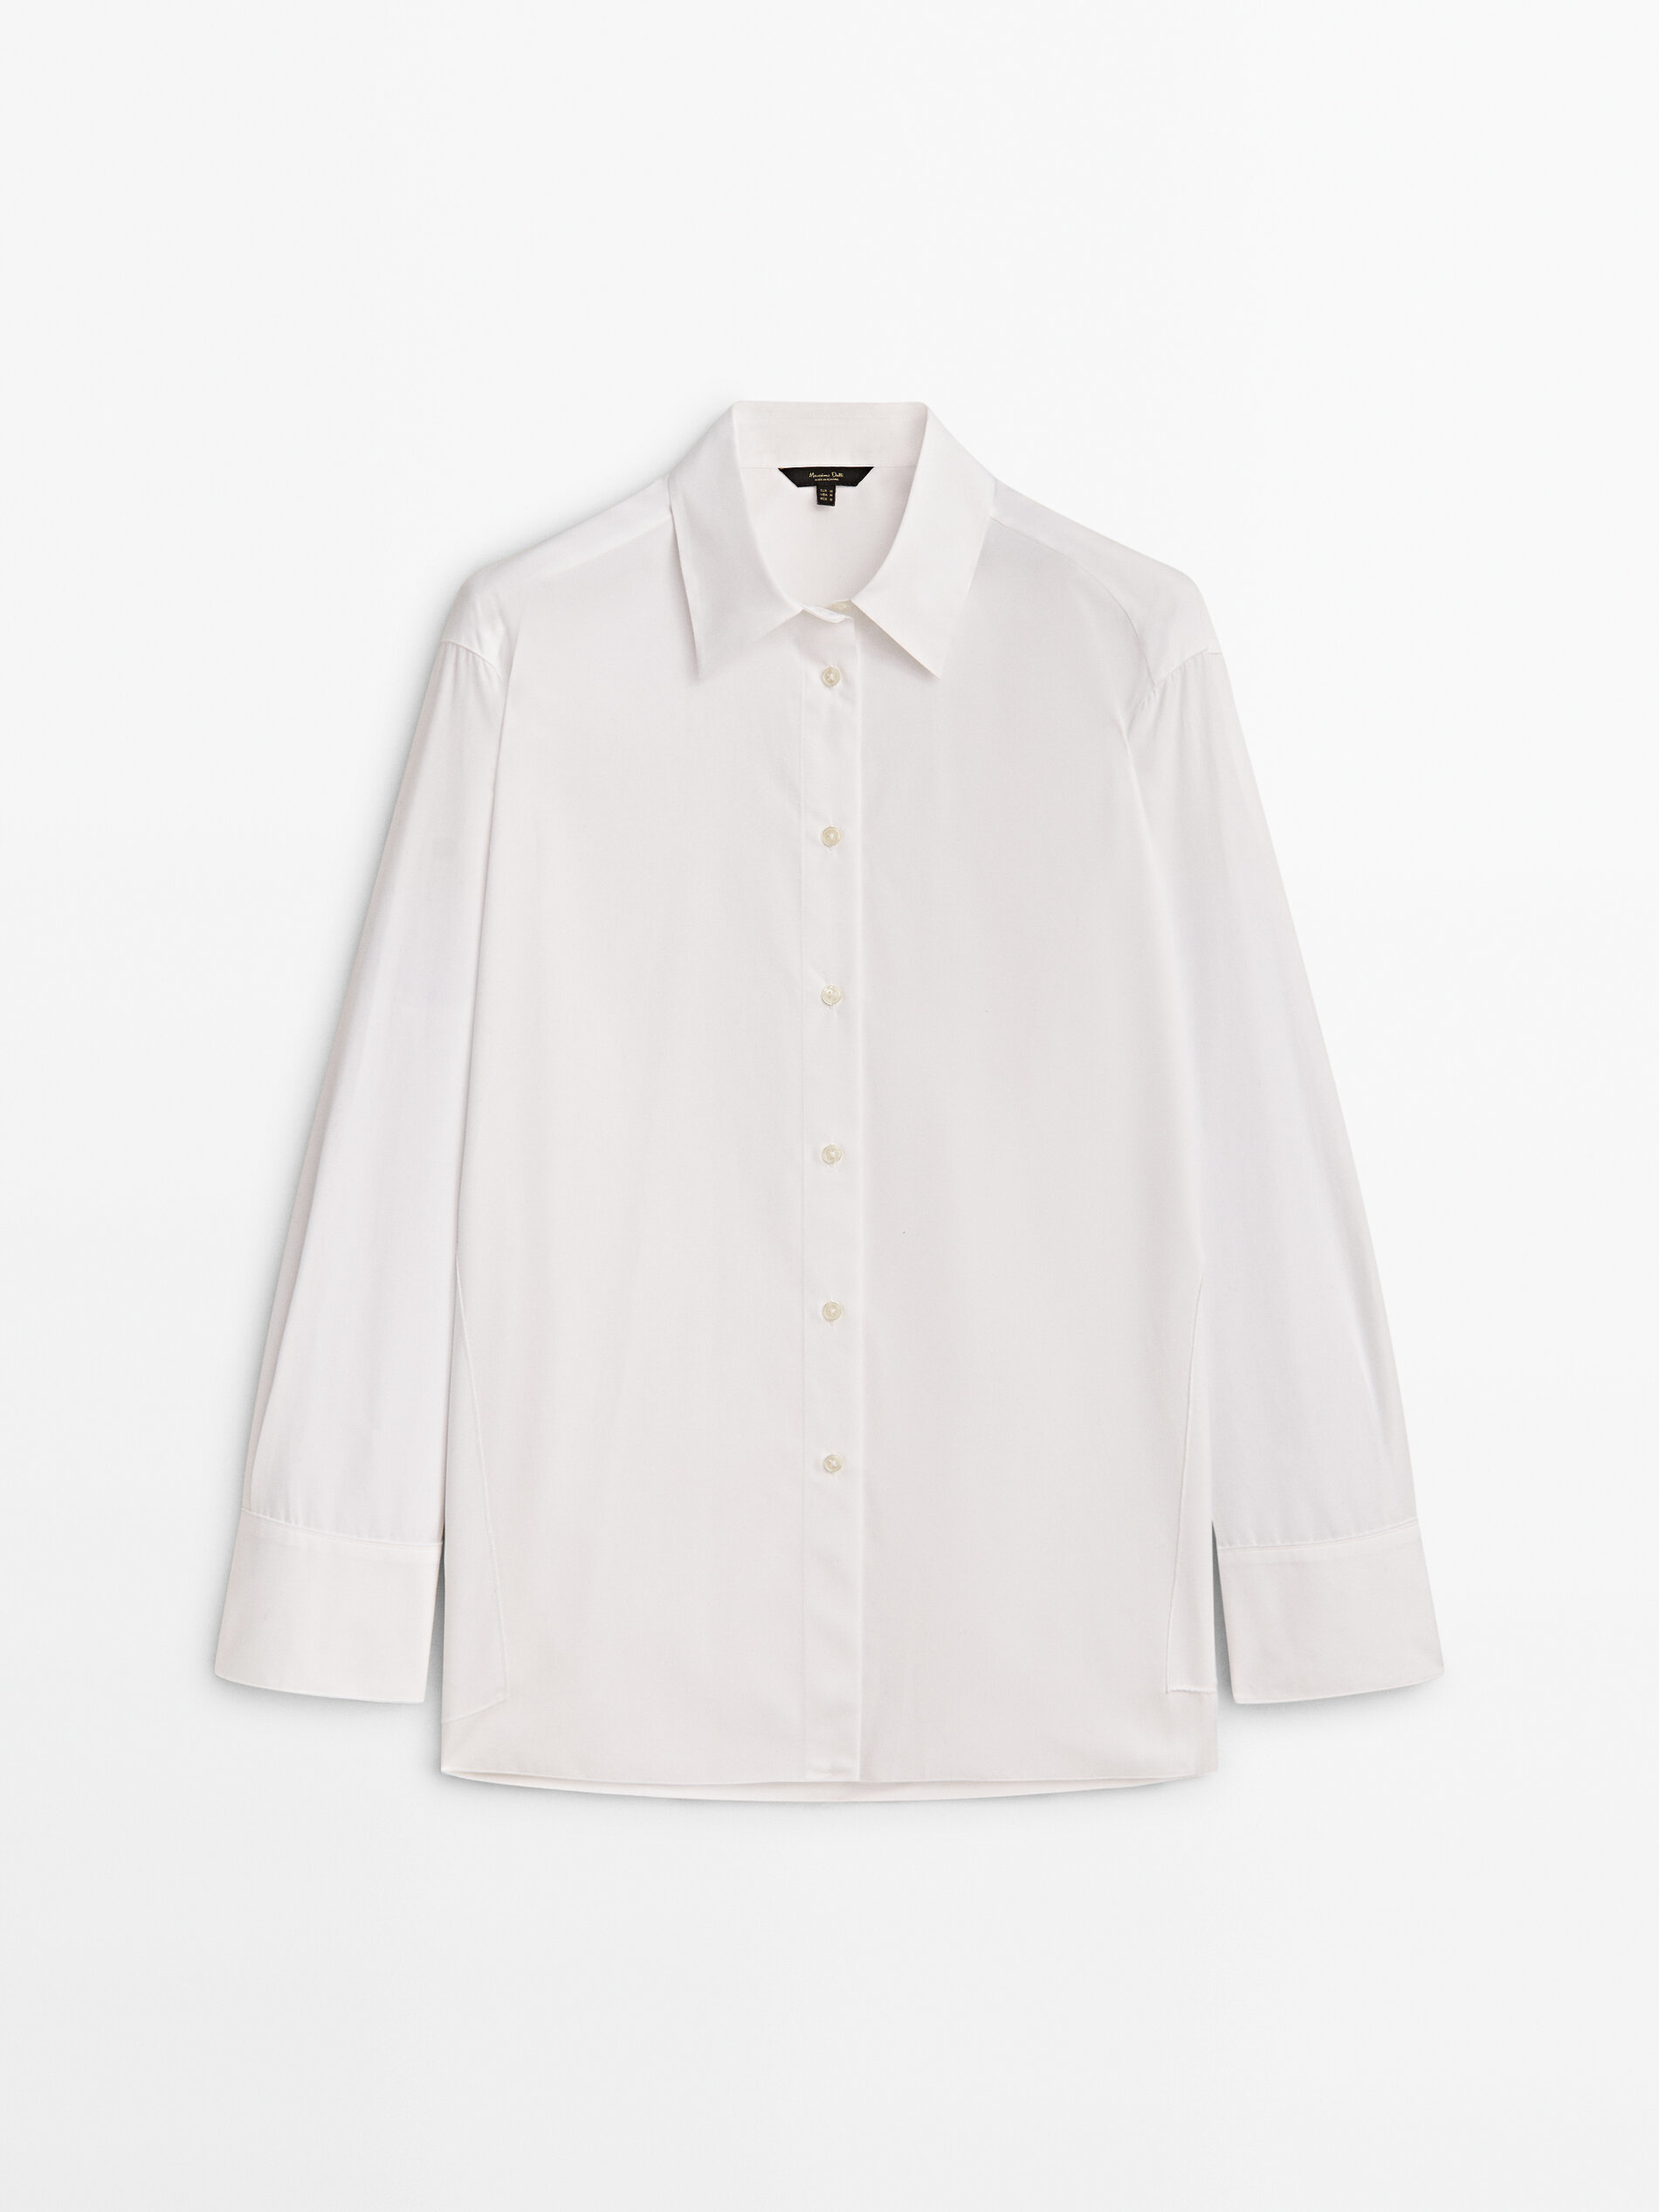 Camisa blanca de popelín de Massimo Dutti (59,95 euros).